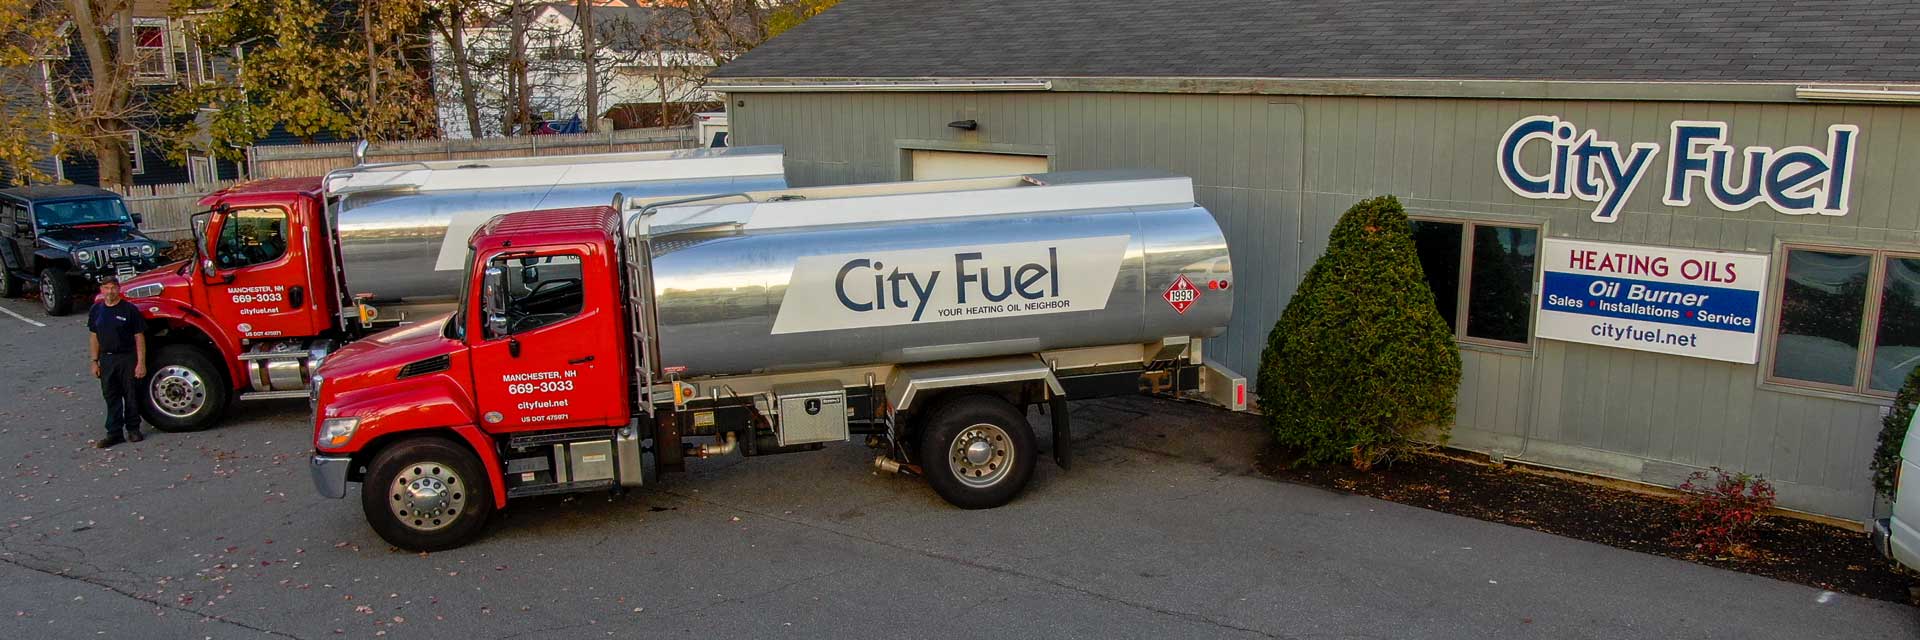 City Fuel Fleet Fueling